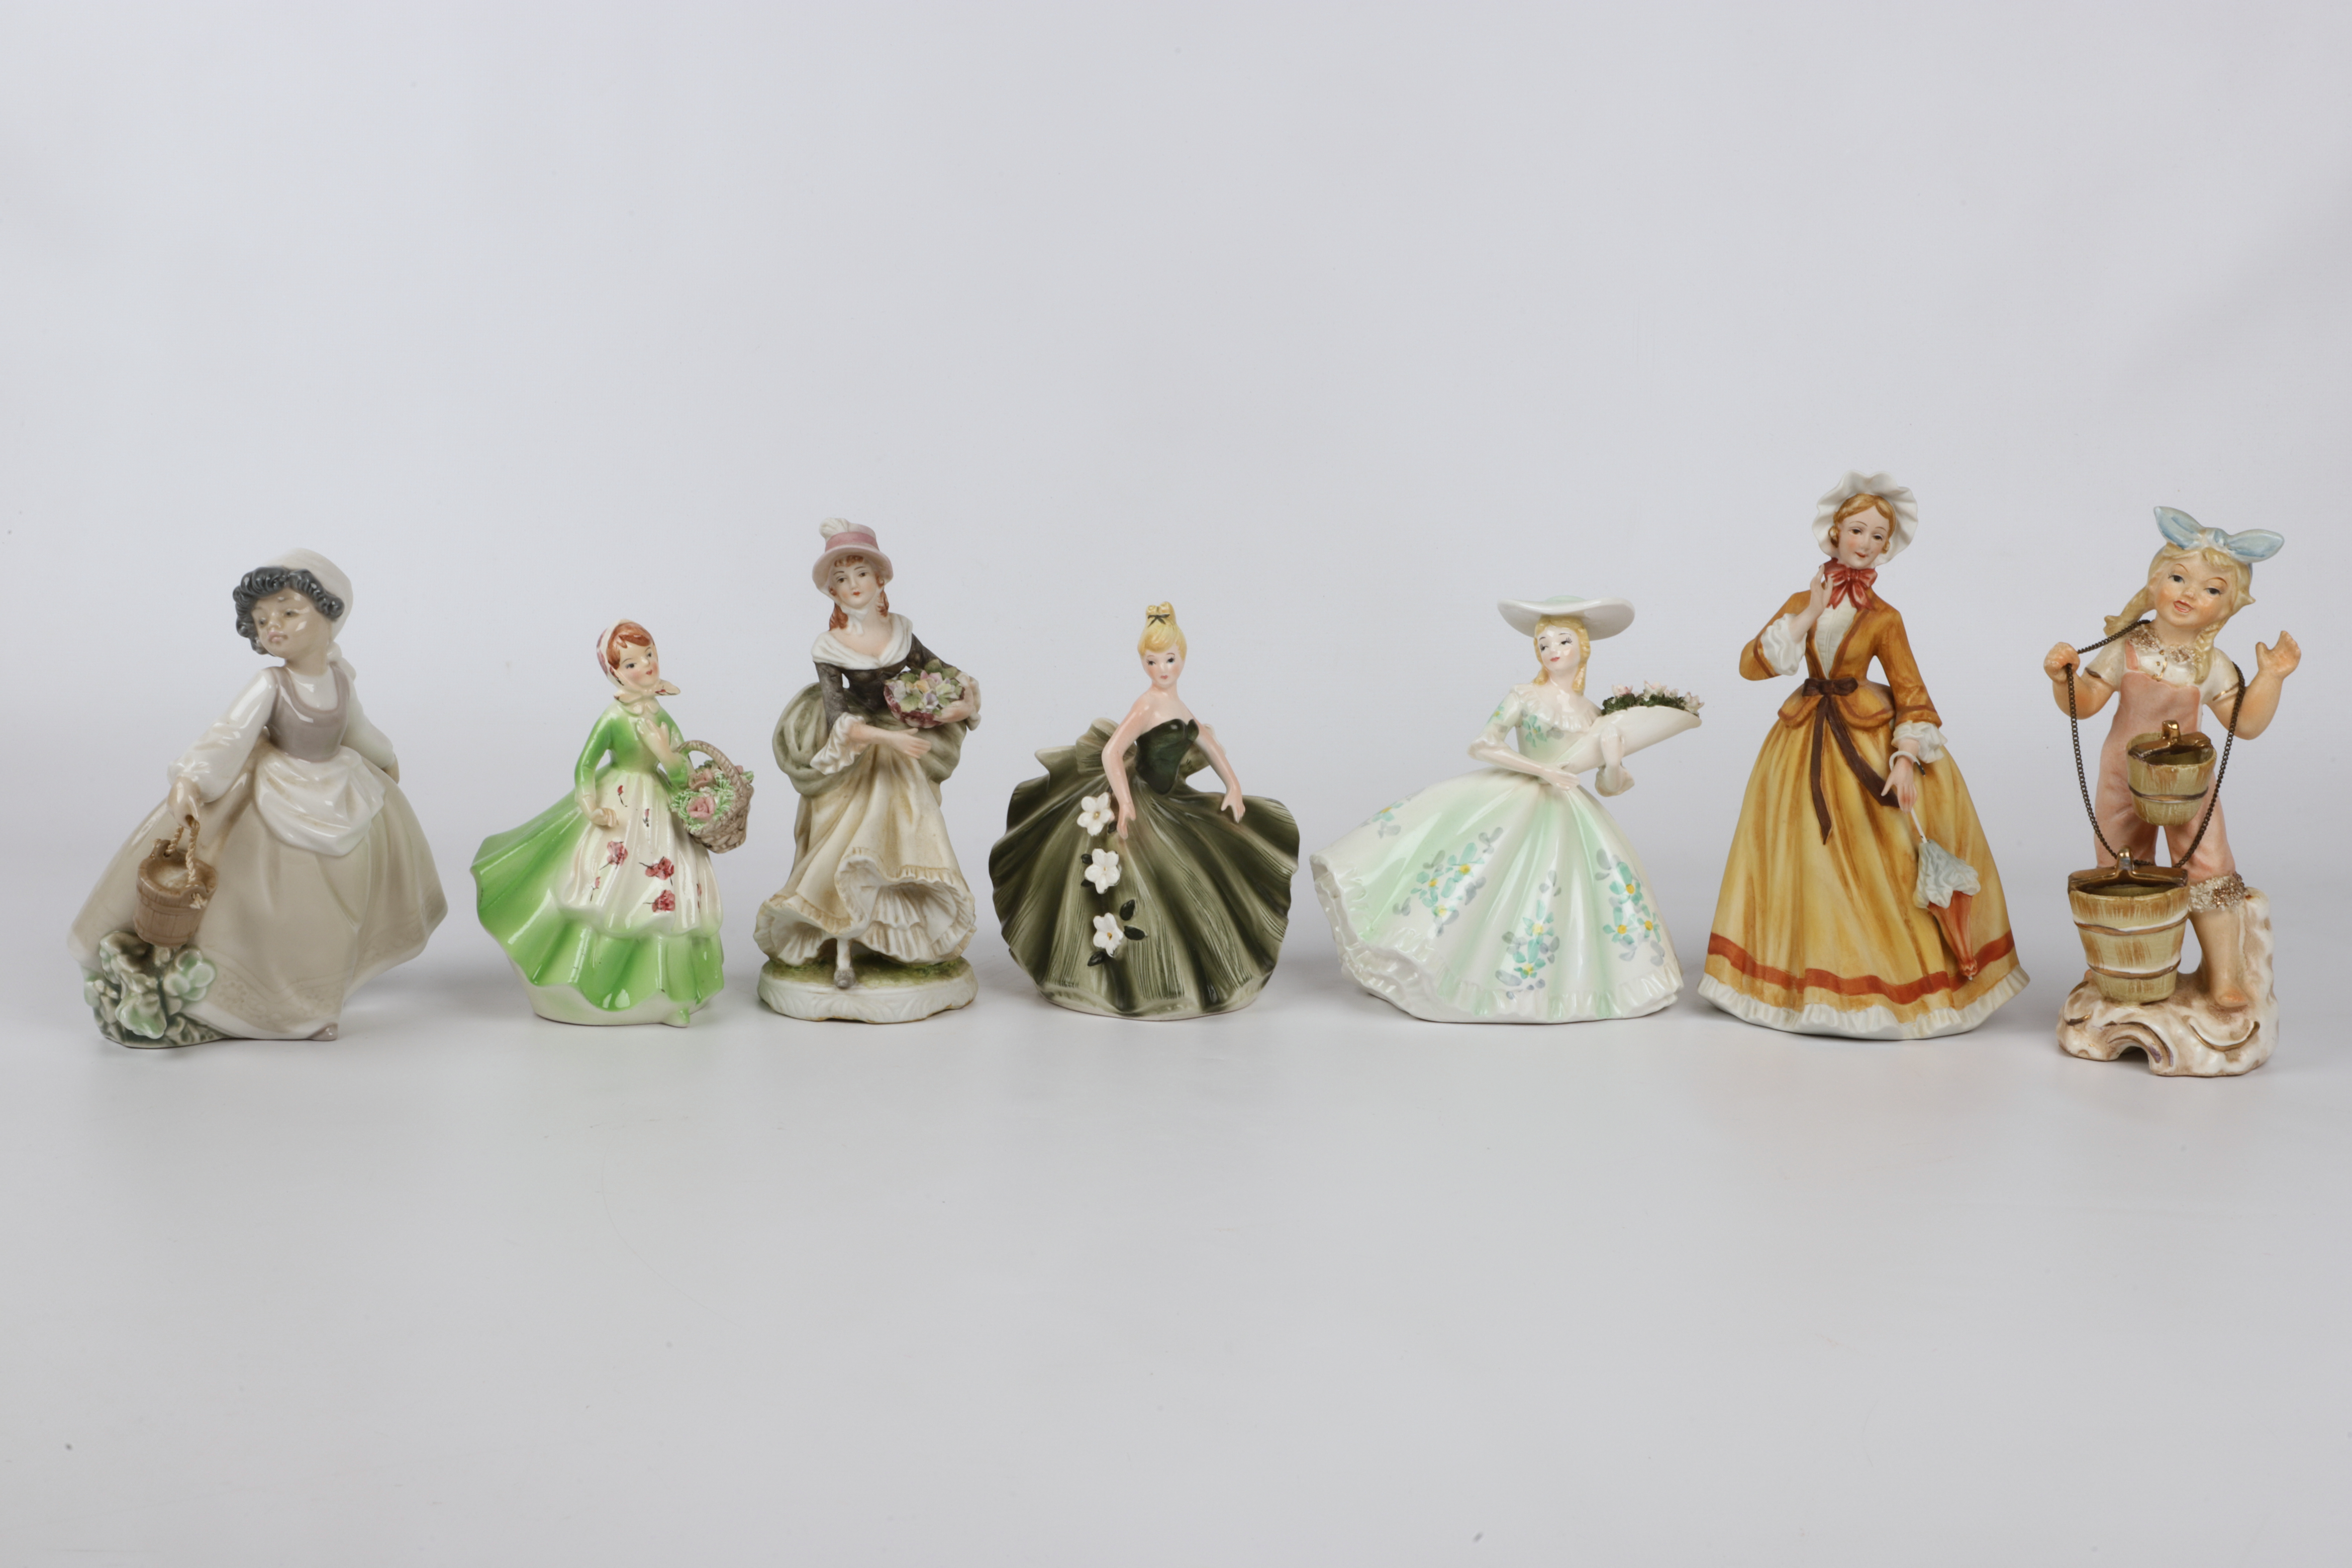  7 Porcelain female figurines  3ca80e